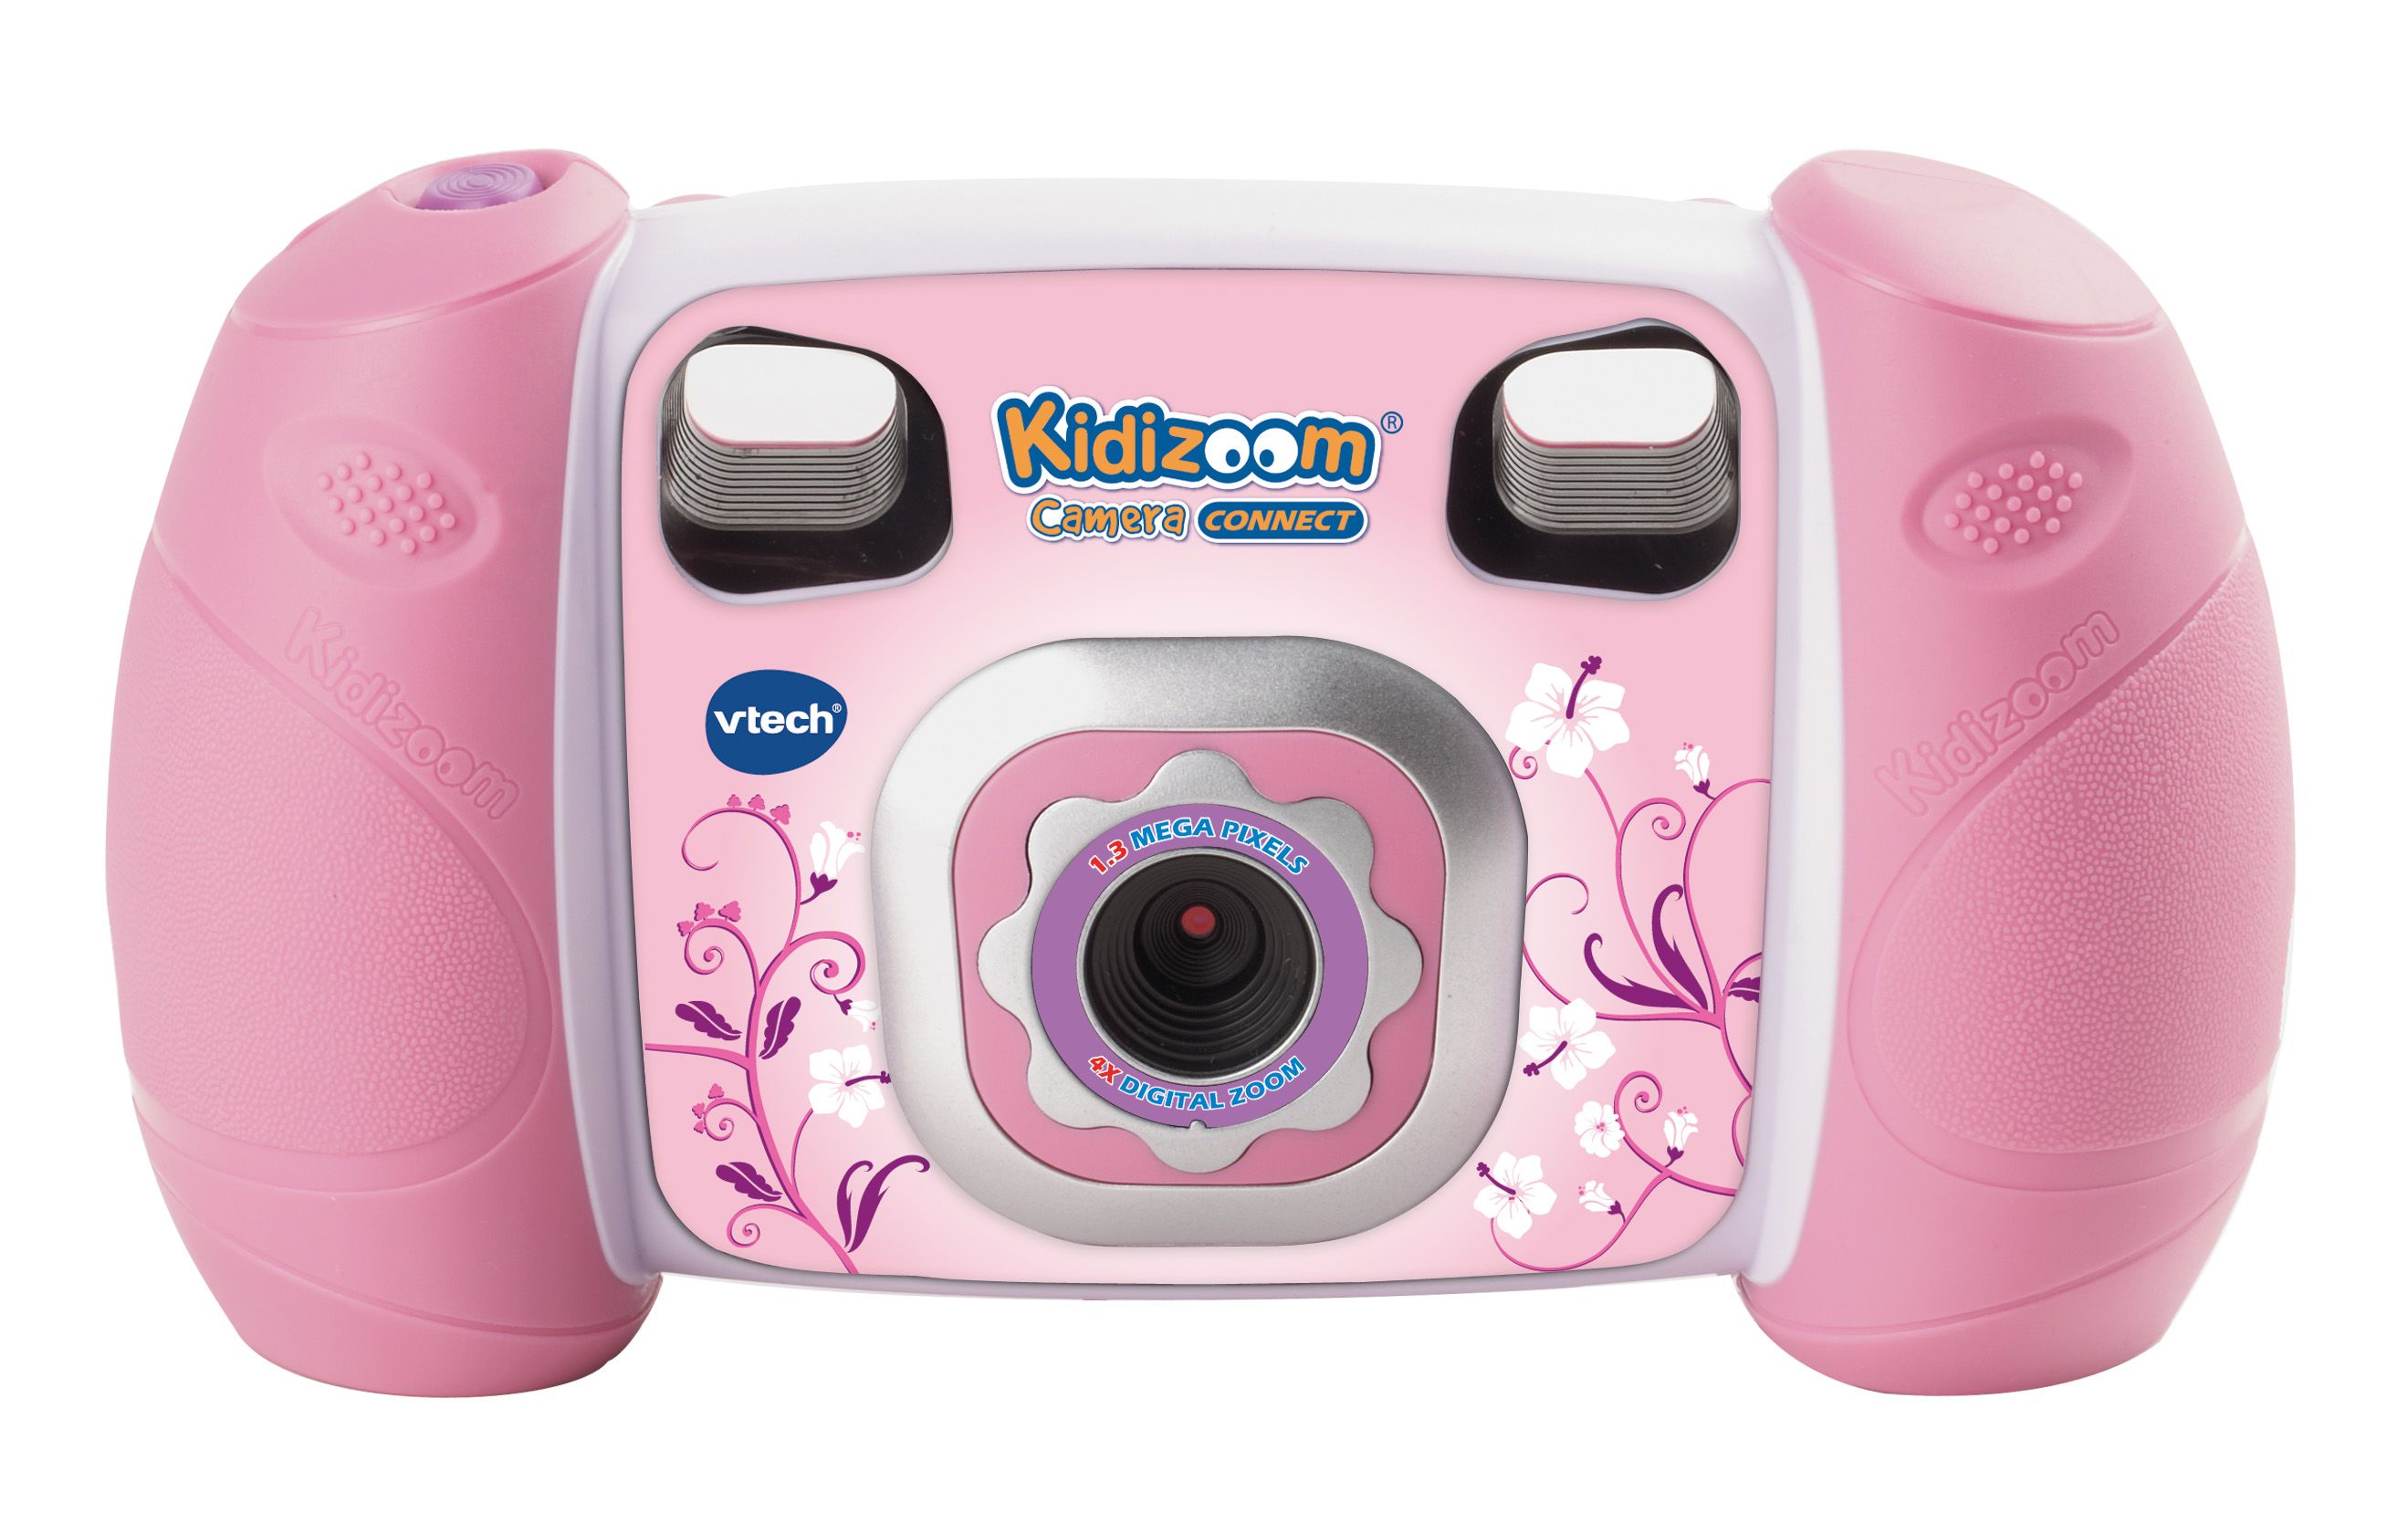 VTech Kidizoom Camera Connect - Pink - image 1 of 9